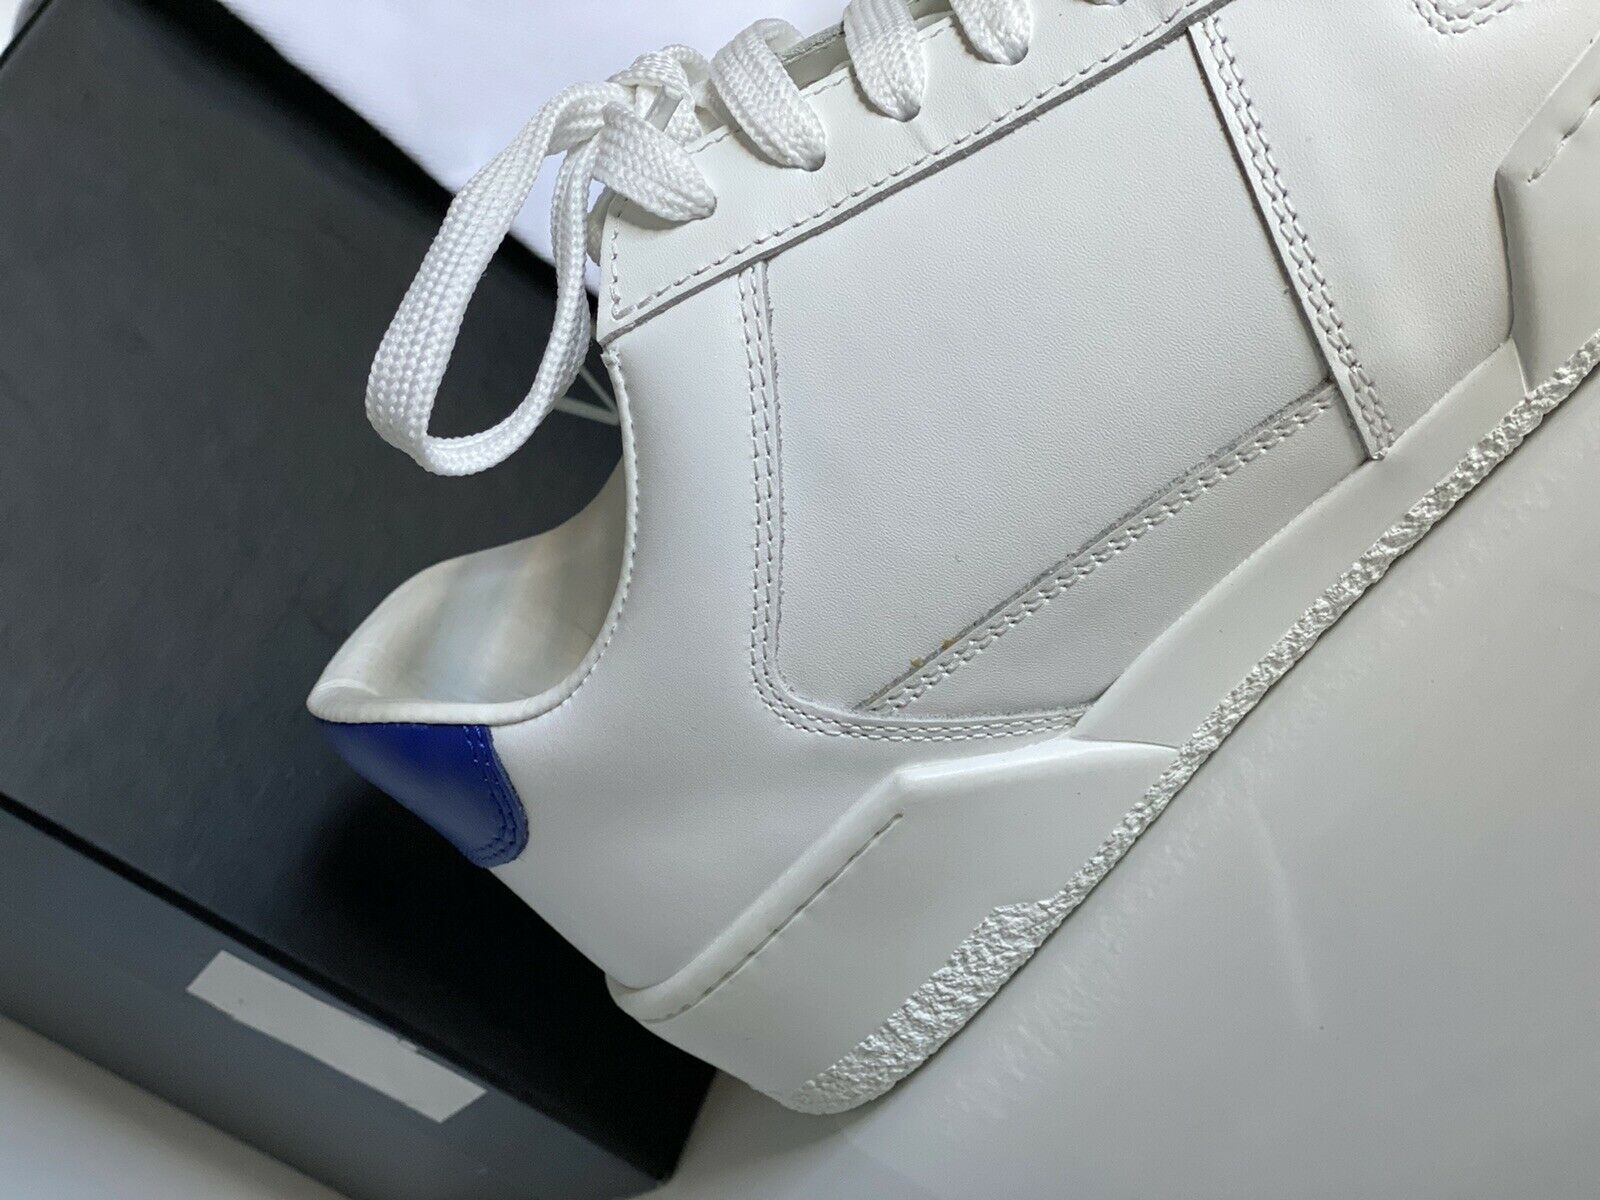 NIB $495 Versace Men's White Leather Sneakers 10 US (43 Euro) Italy DSU7843